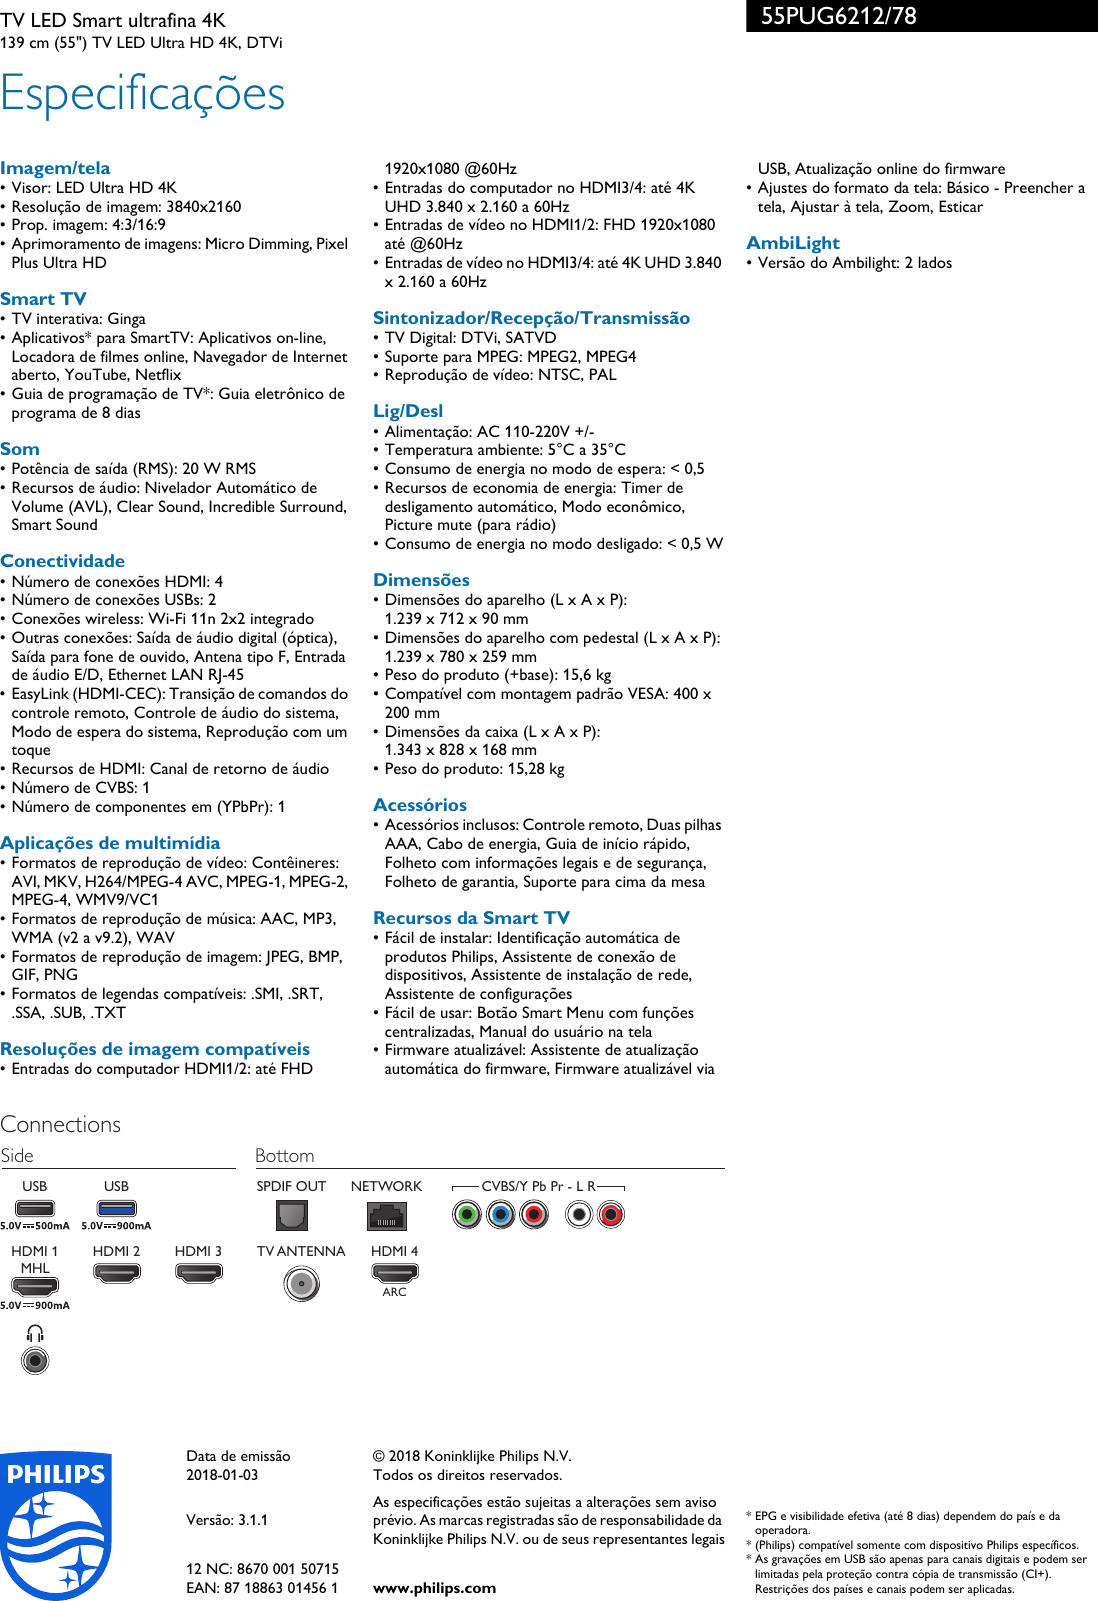 Page 3 of 3 - Philips 55PUG6212/78 TV LED Smart Ultrafina 4K Com Ambilight Bilateral E Pixel Plus Ultra HD User Manual Folheto 55pug6212 78 Pss Brpbr